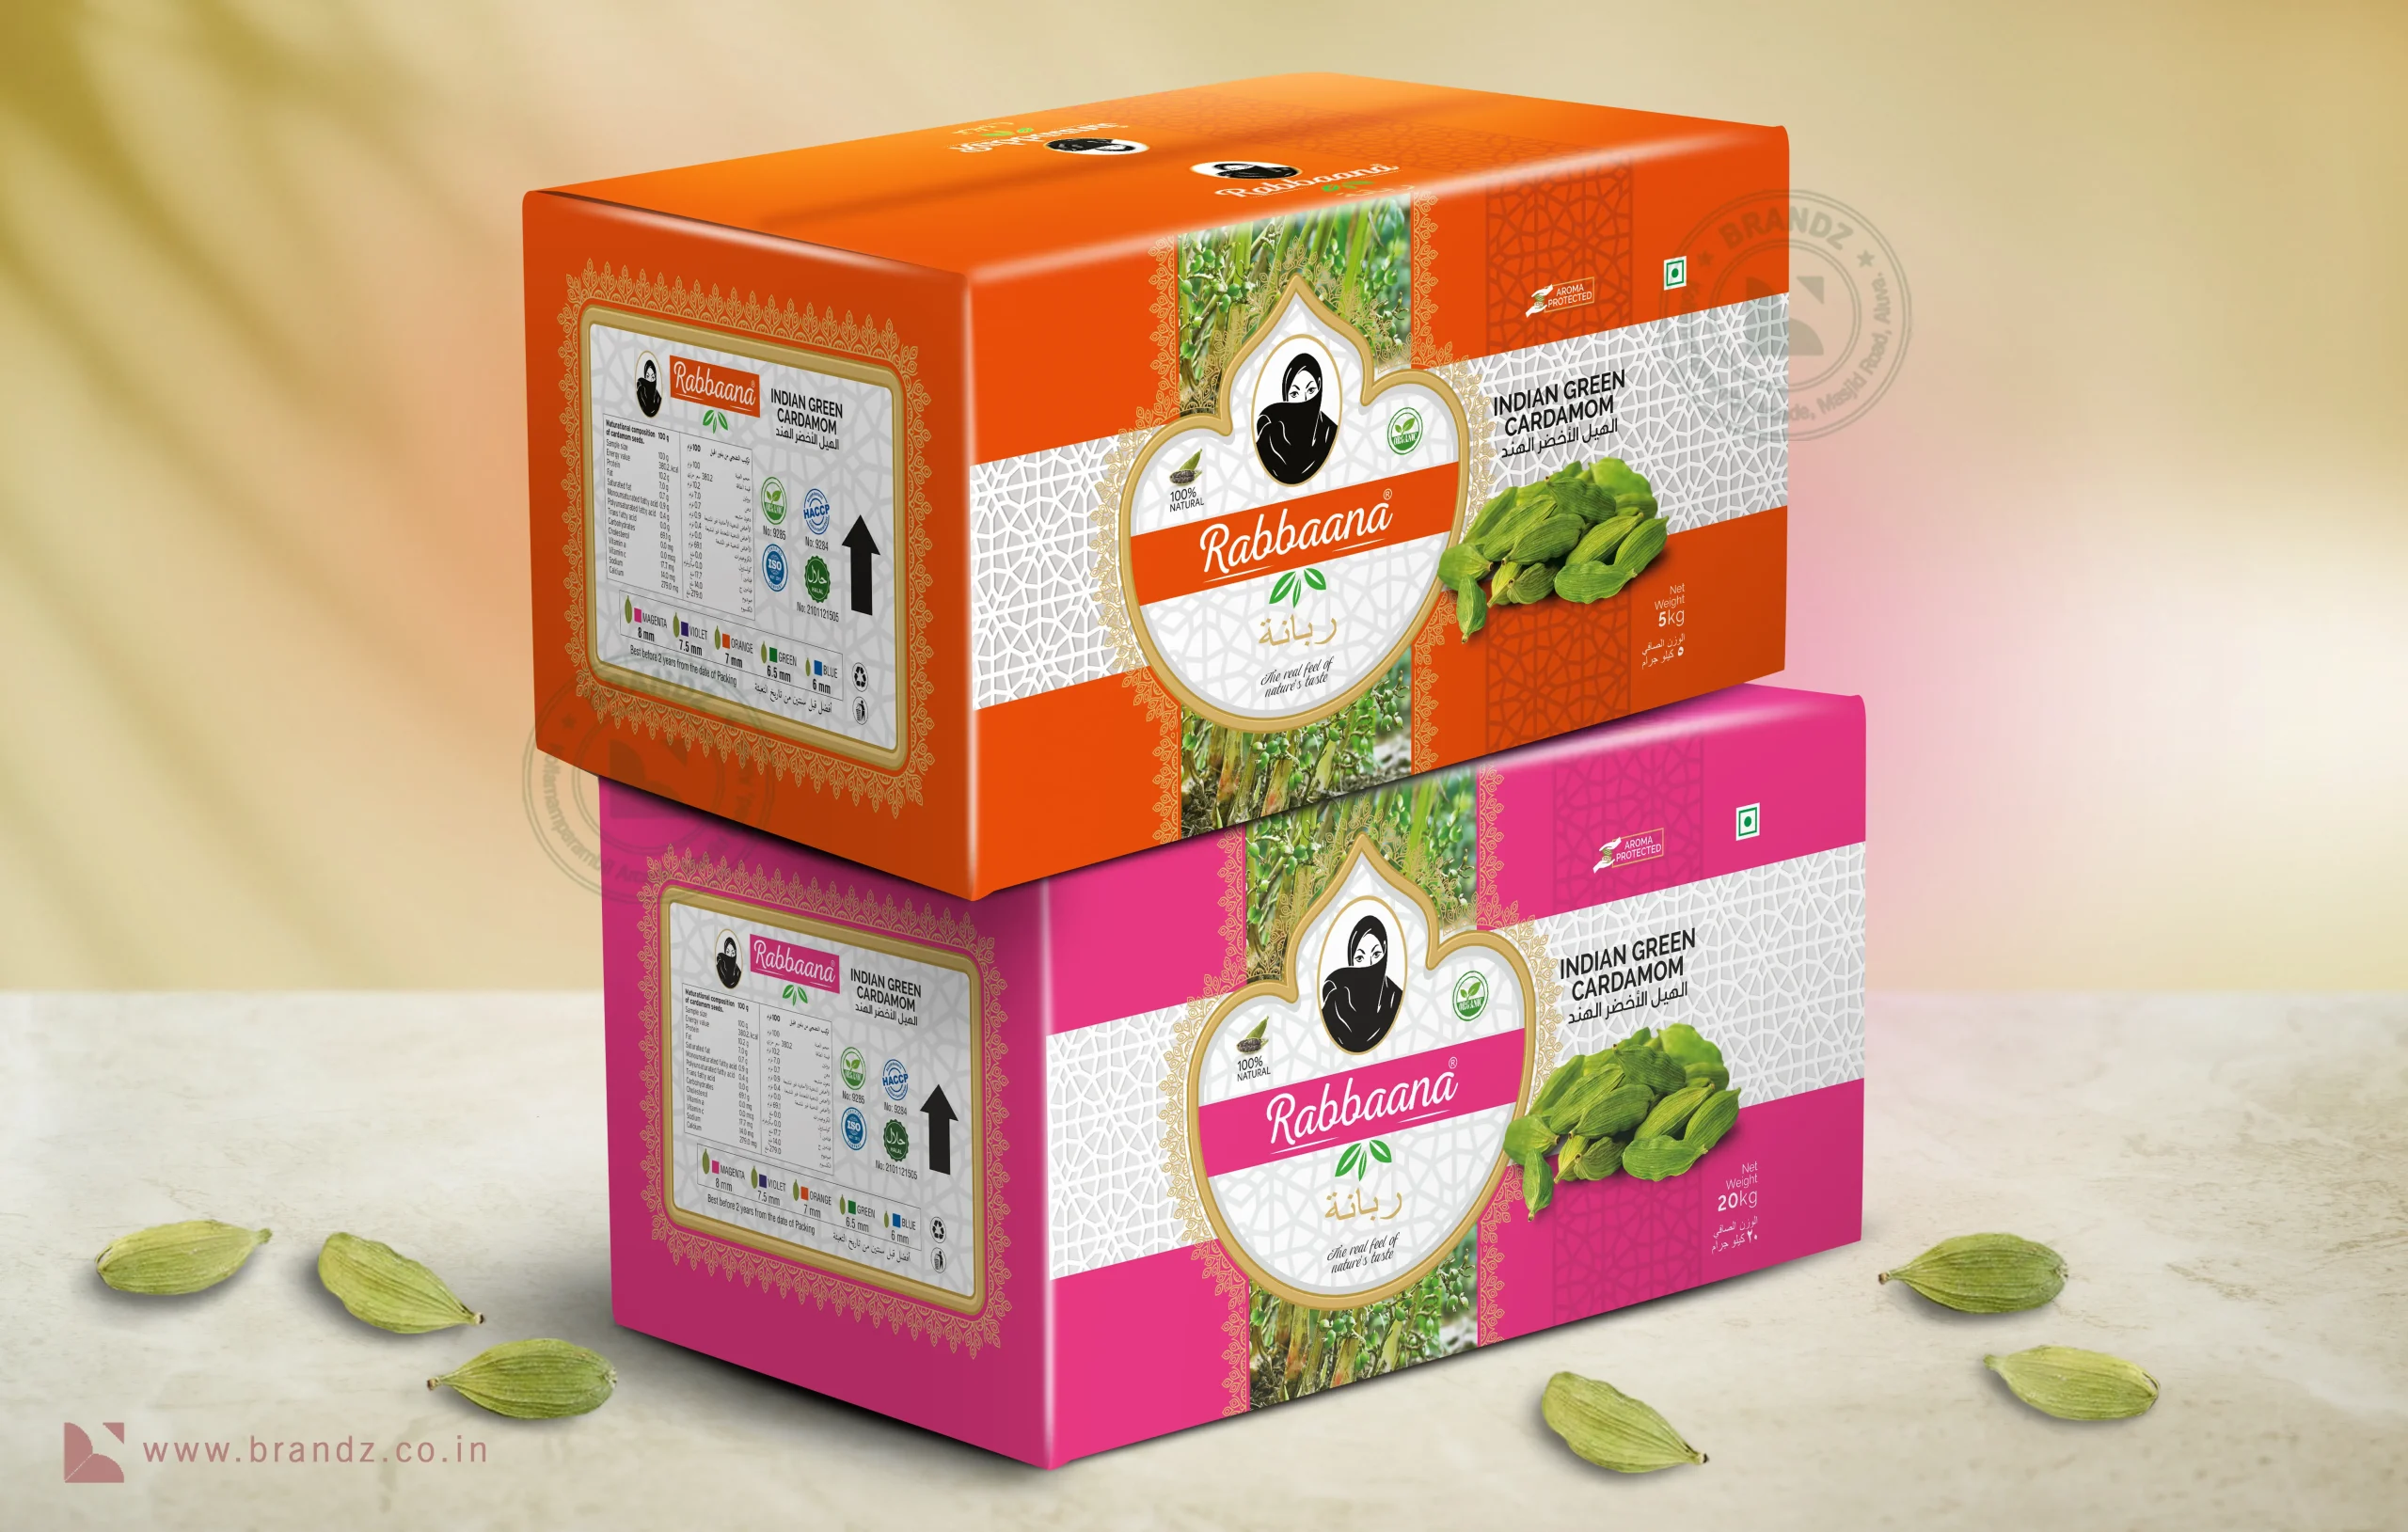 Rabbaana Indian Green Cardamom Box